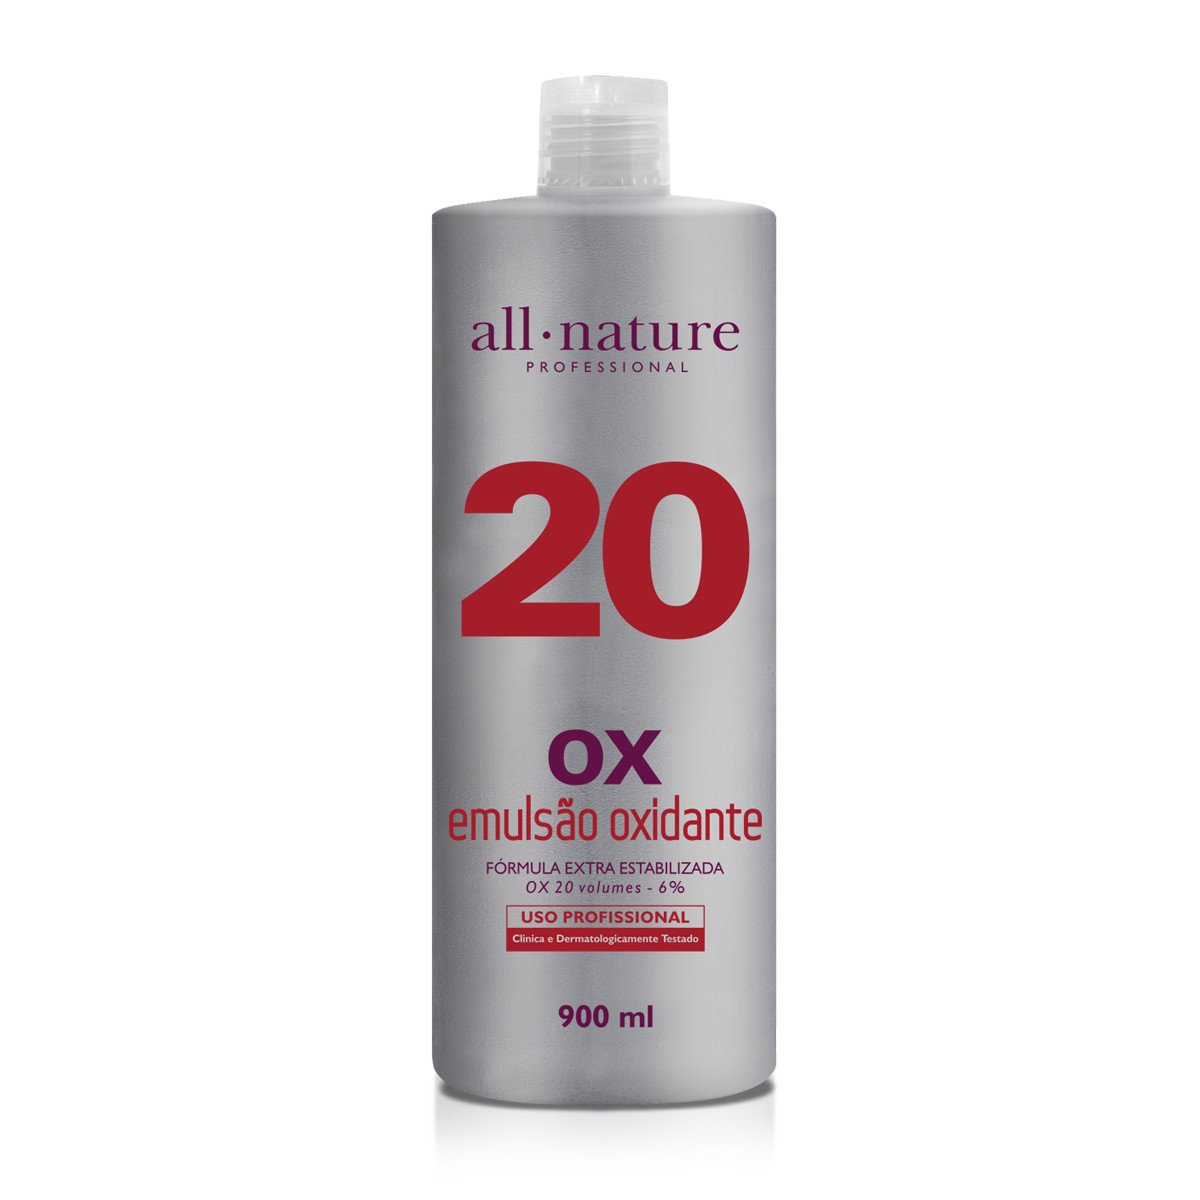 All Nature Brazilian Keratin Treatment Oxidizing Emulsion OX Discoloration Treatment 20 Vol. 6% 900ml - All Nature